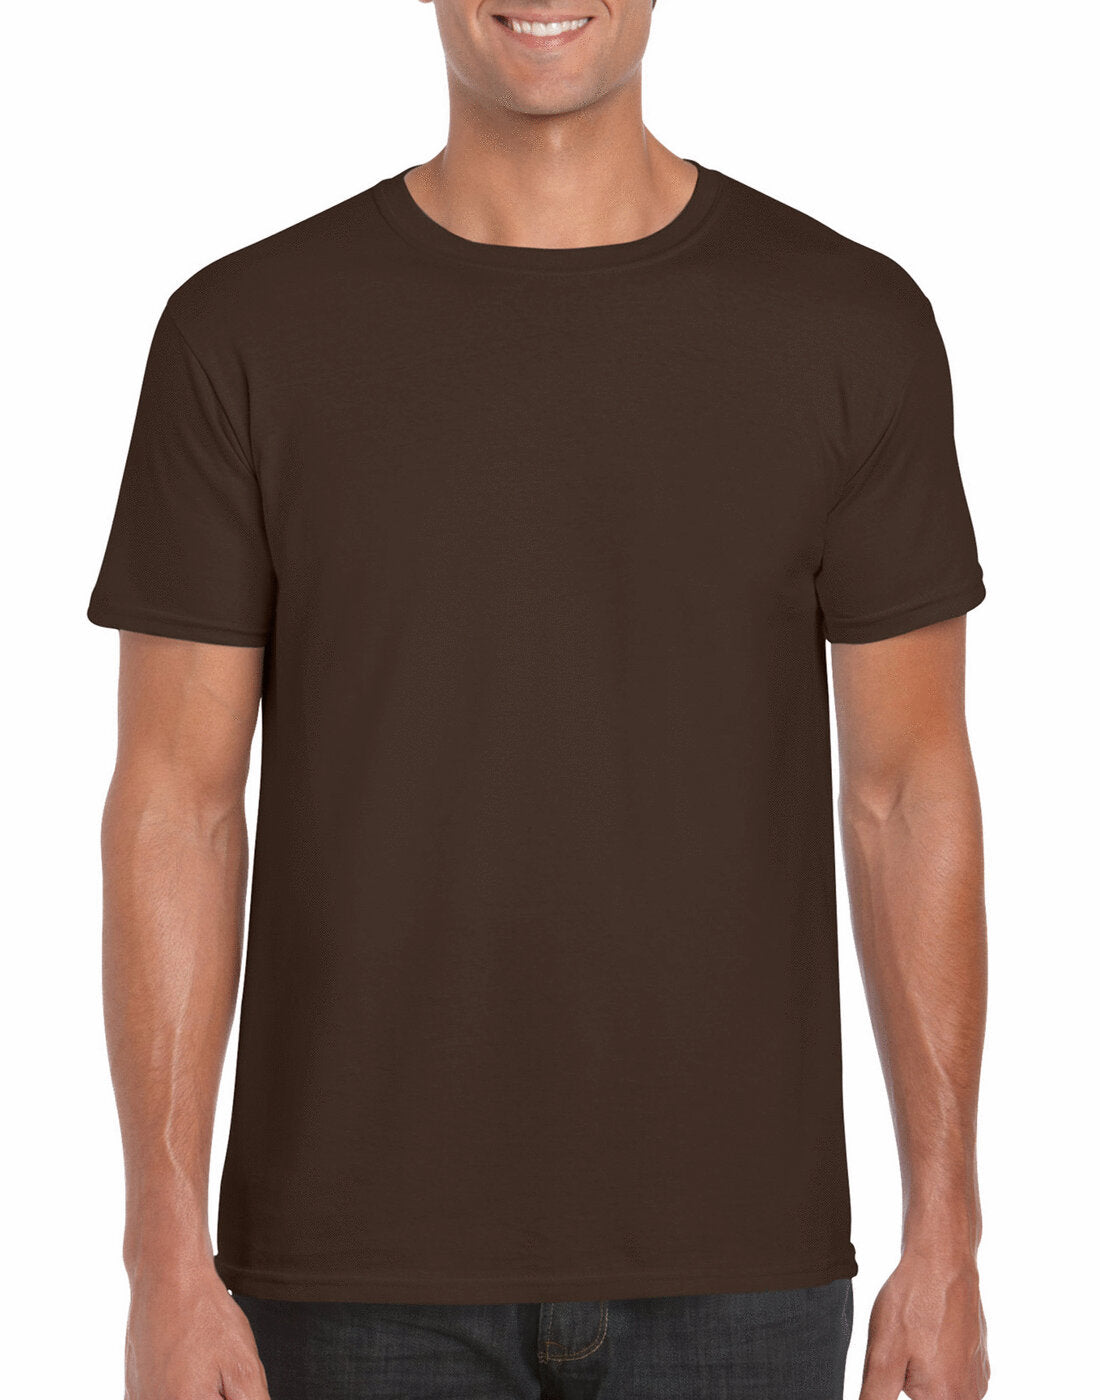 Gildan Adult Softstyle Ringspun T-Shirt - GD01 - Dark Chocolate